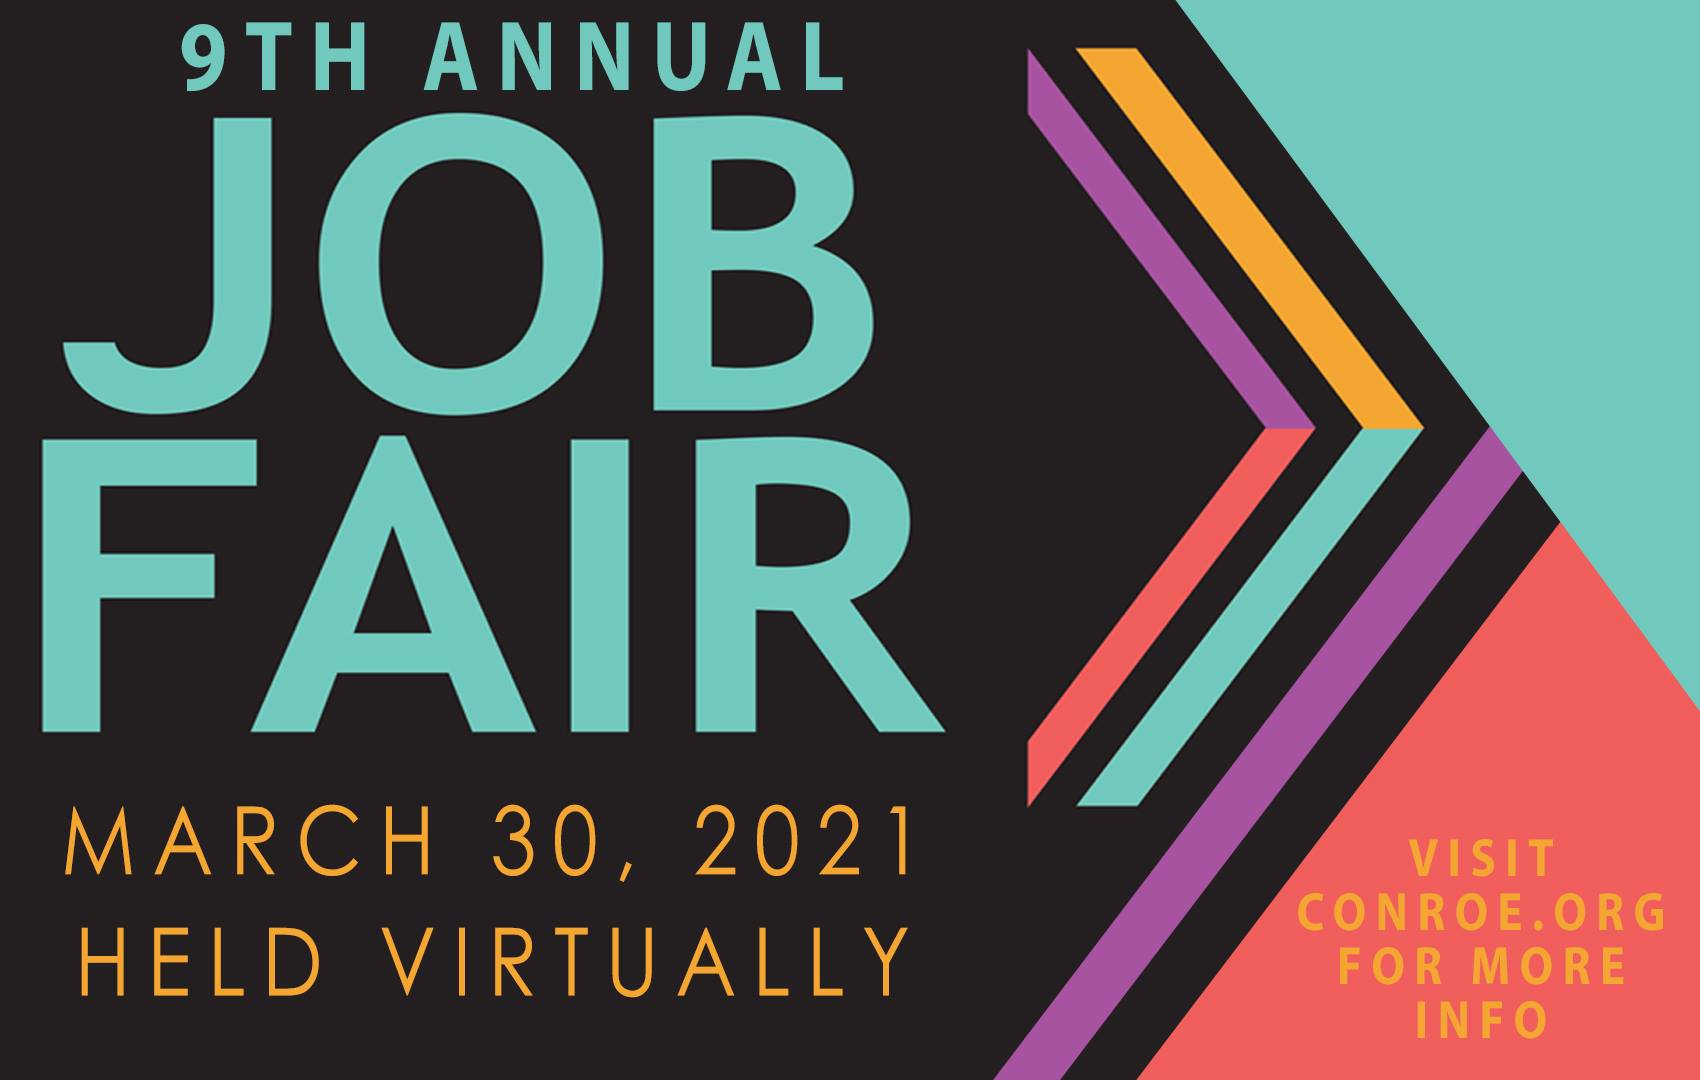 9th Annual Conroe Job Fair Set for March 30 Utilizing Virtual Platform Photo